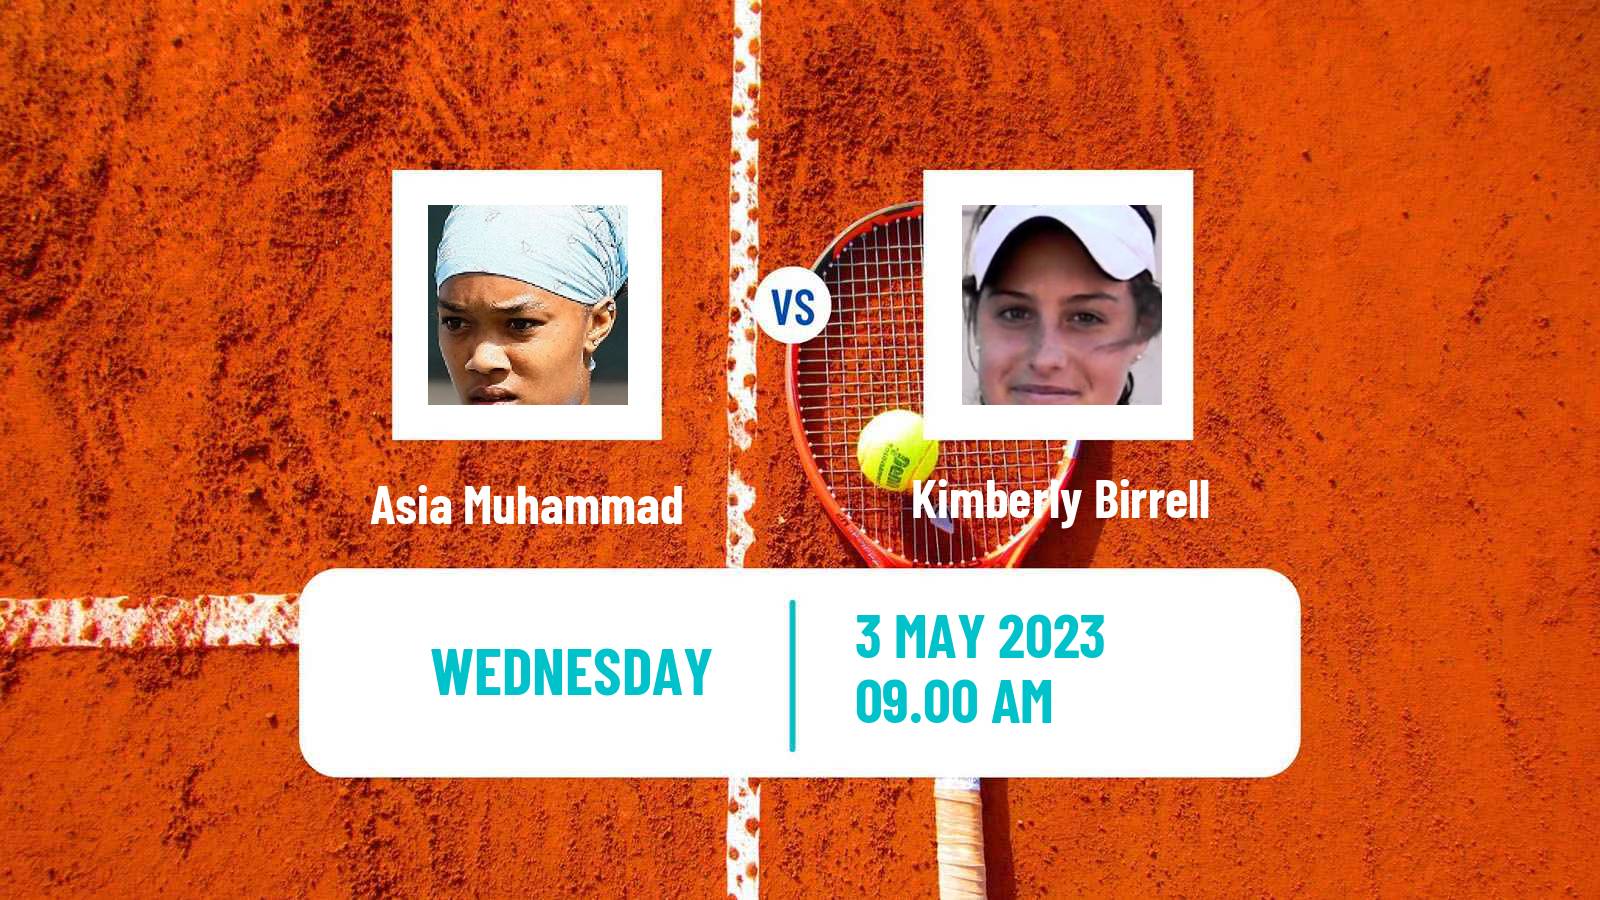 Tennis ITF Tournaments Asia Muhammad - Kimberly Birrell